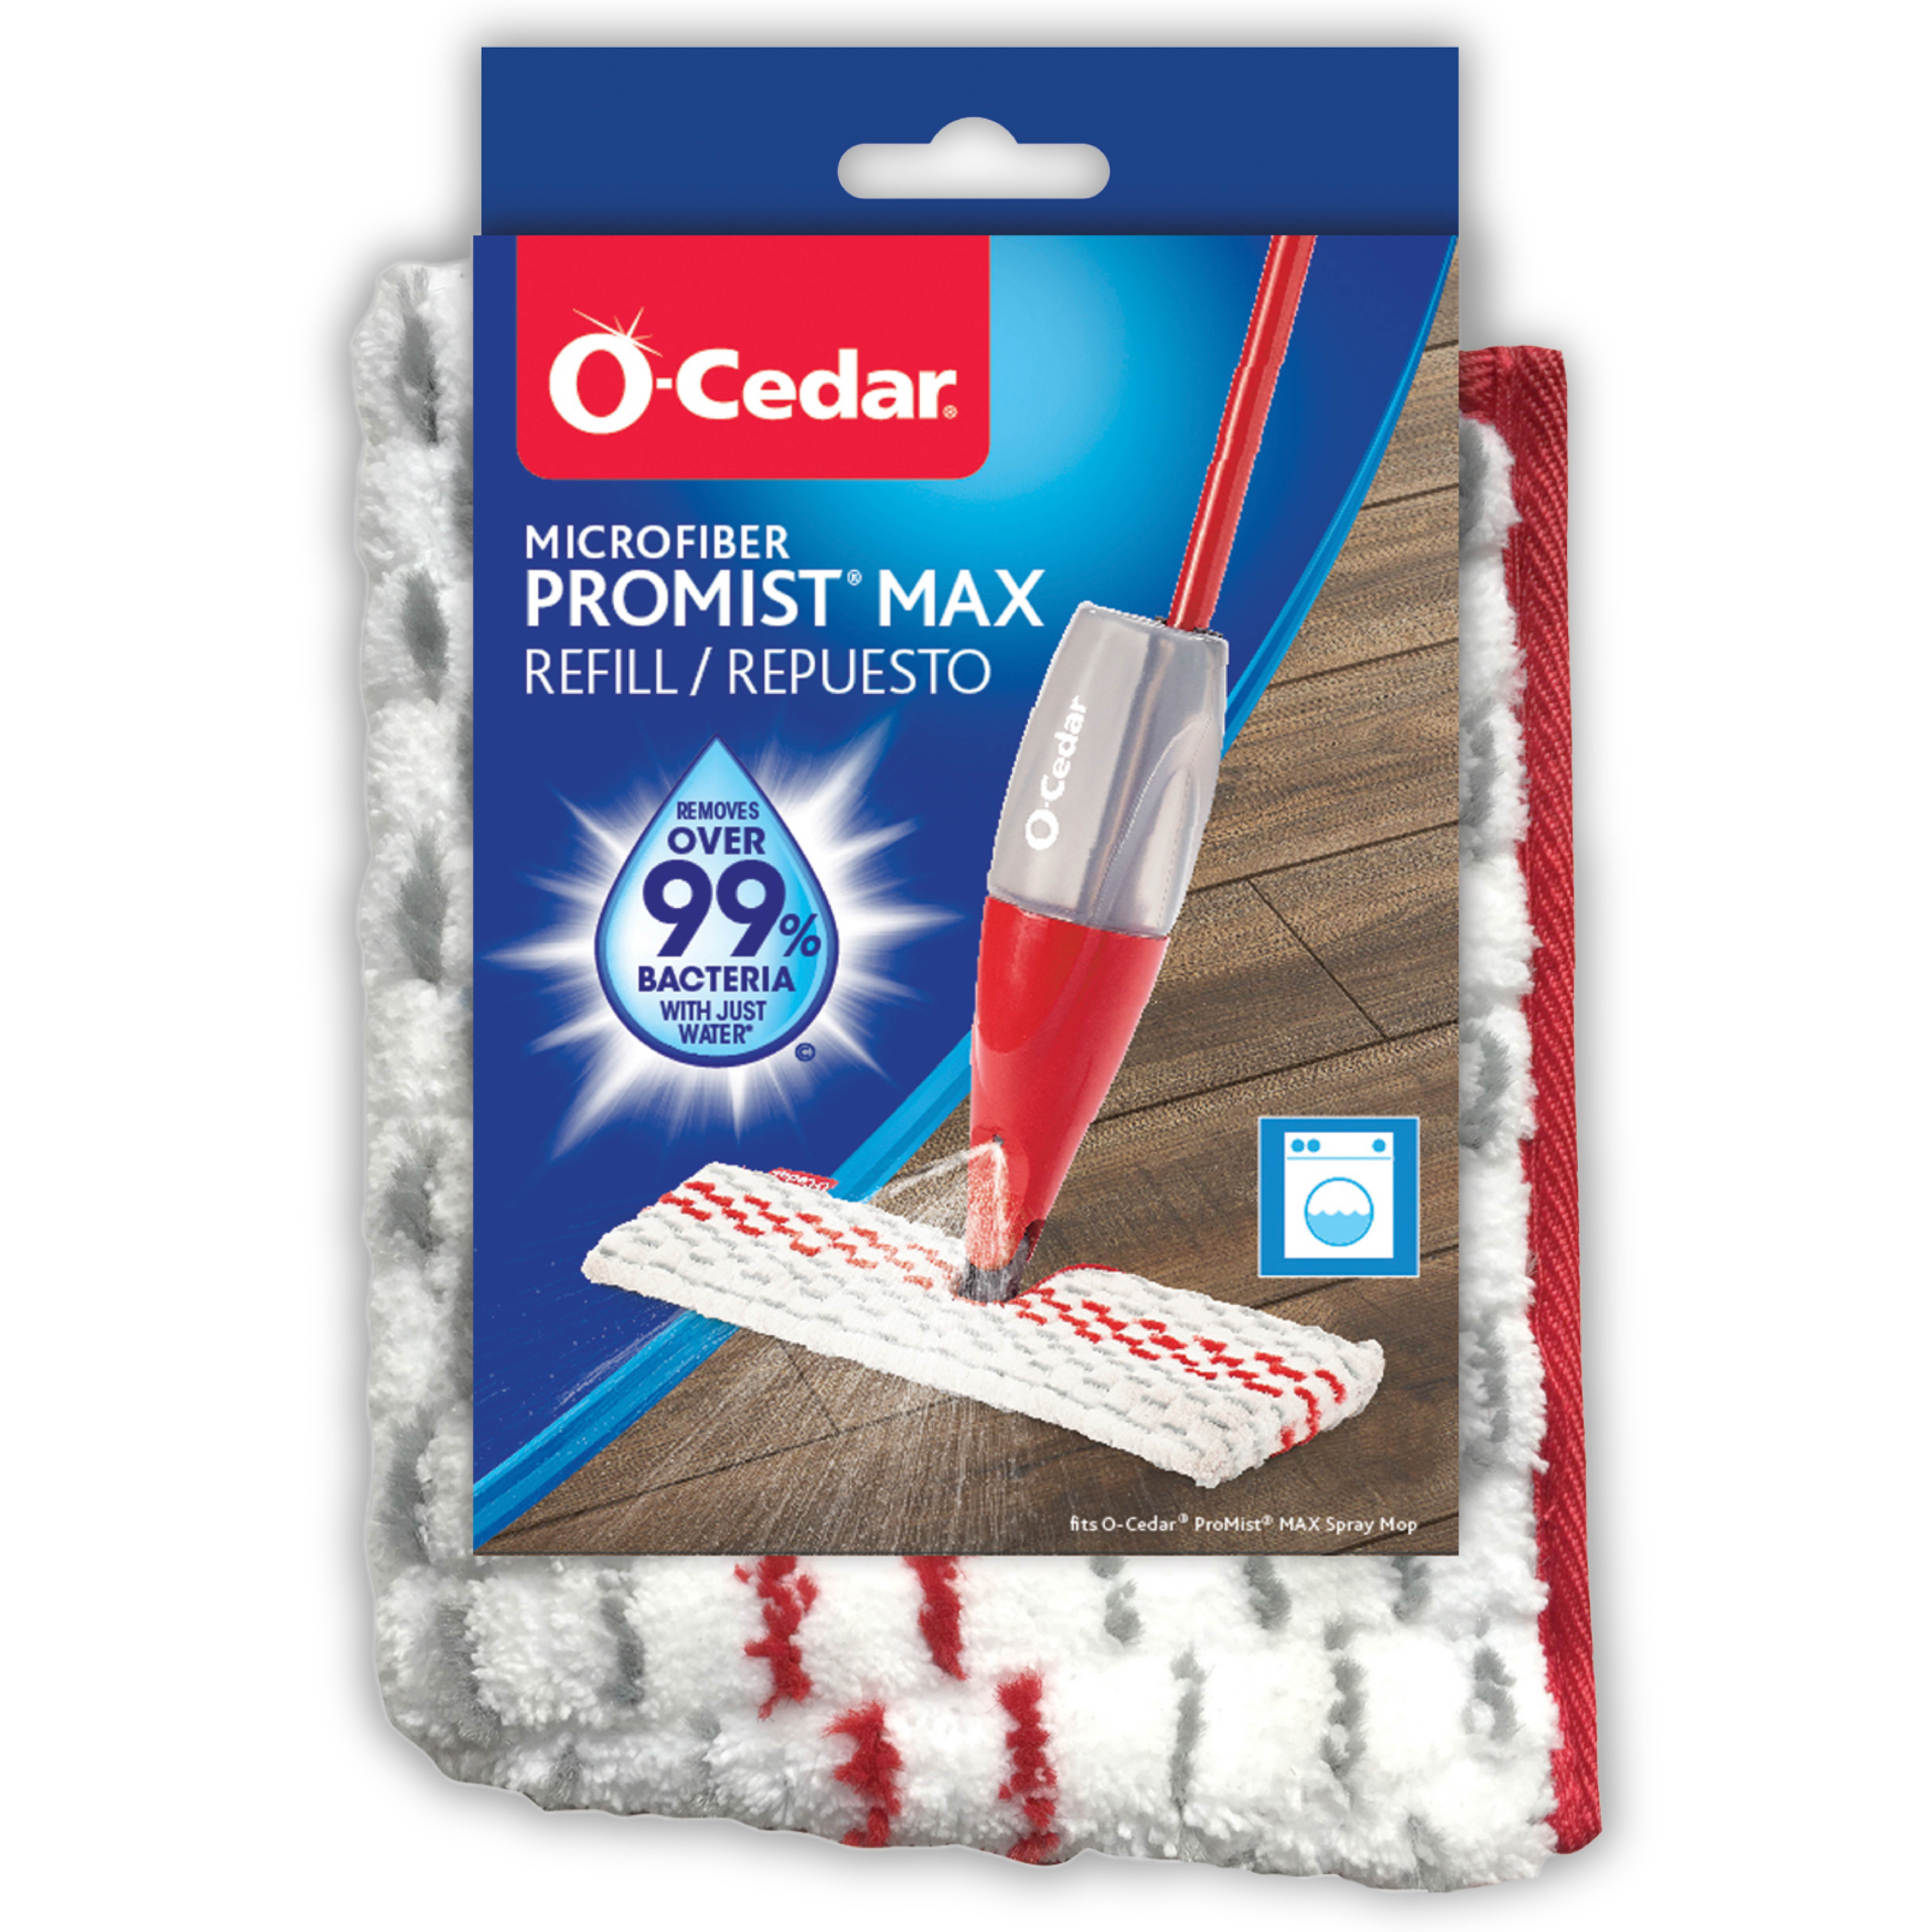 O-Cedar Promist MAX Microfiber Spray Mop Removes 99% of Bacteria